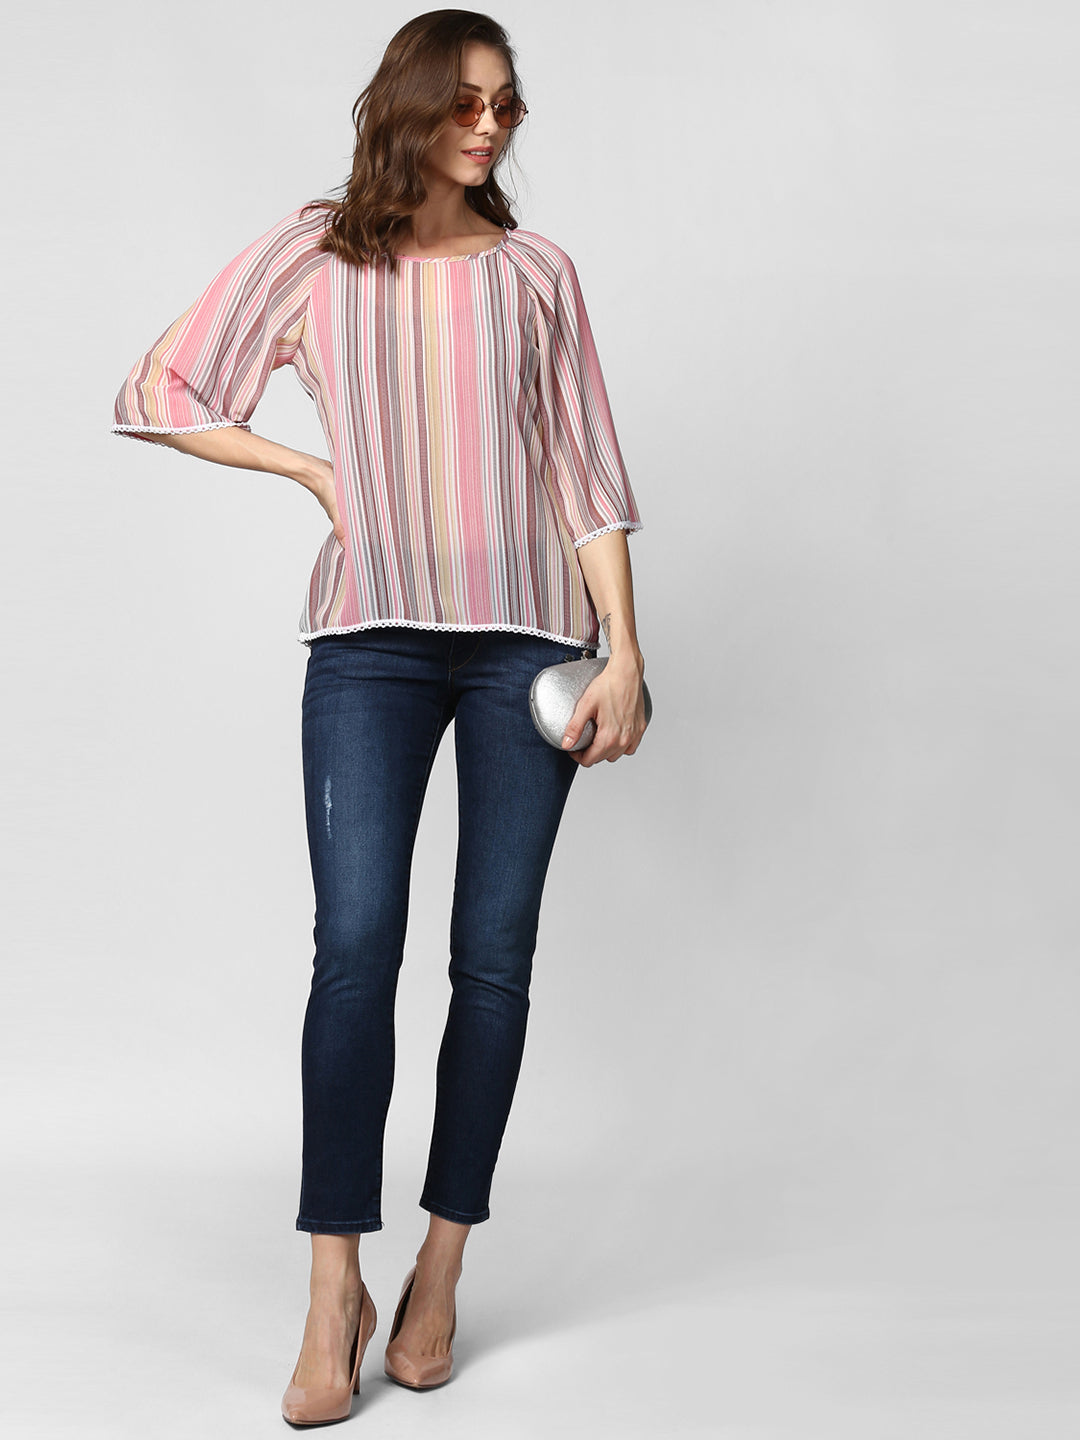 Women's Polyester Pink stripe Top